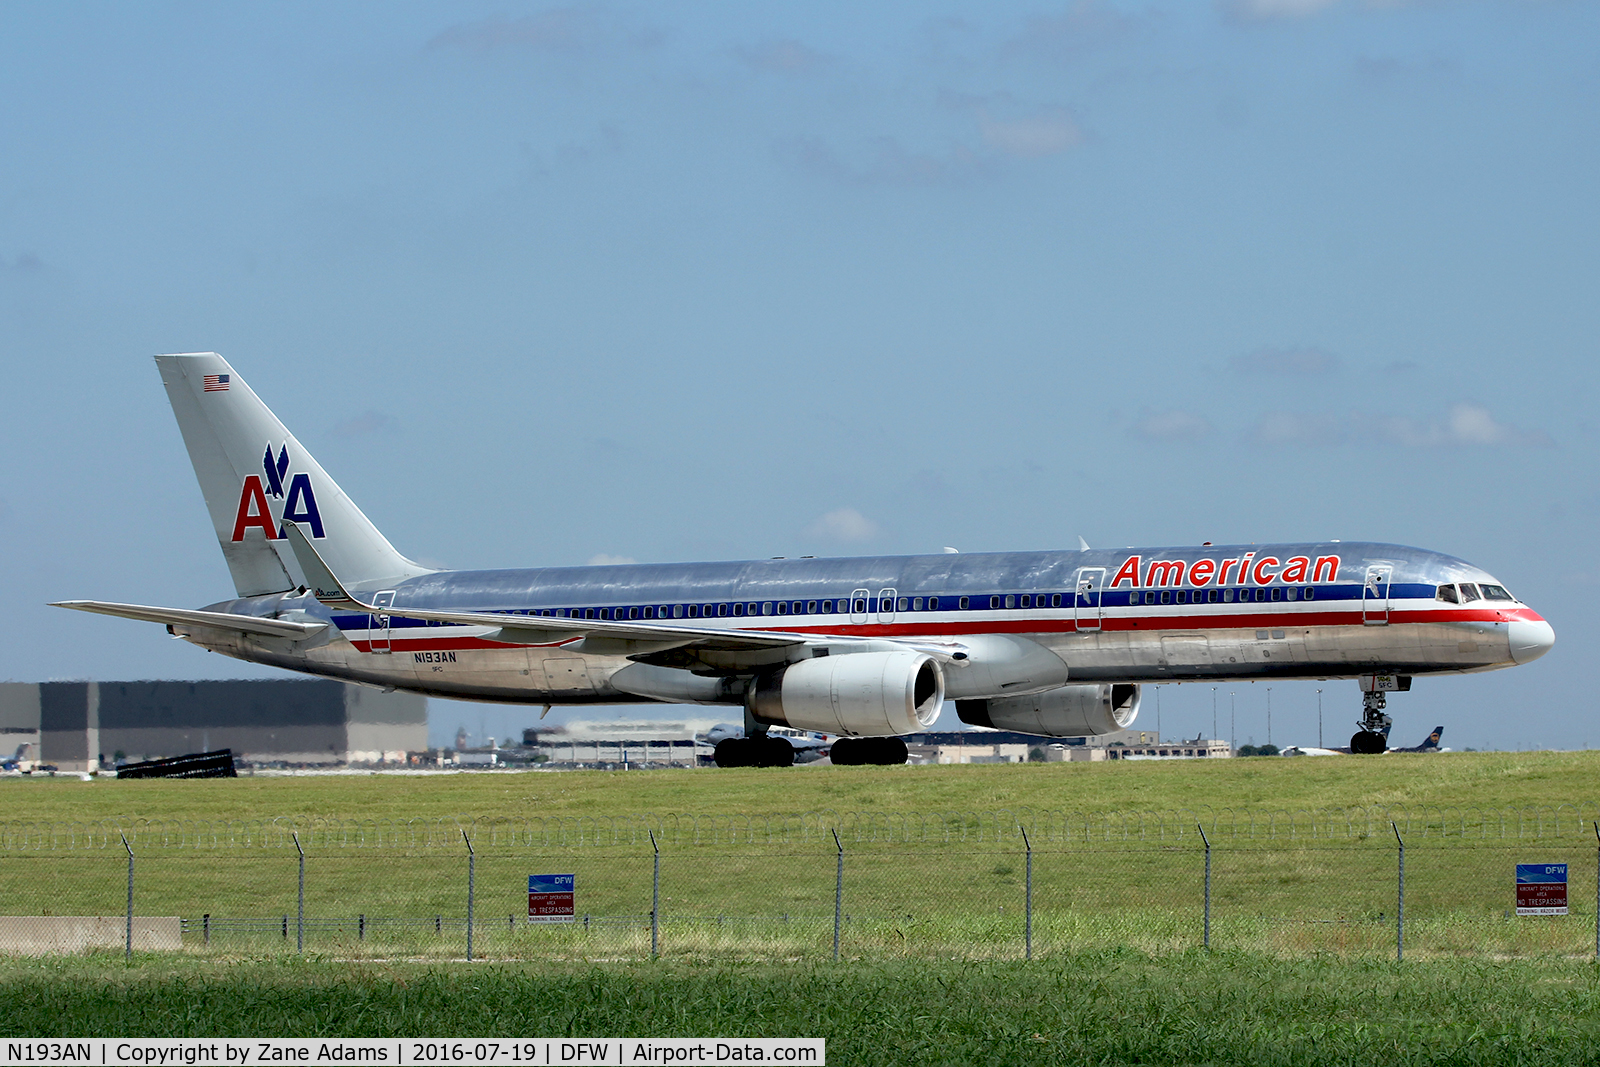 N193AN, 2001 Boeing 757-223 C/N 32387, Arriving at DFW Airport